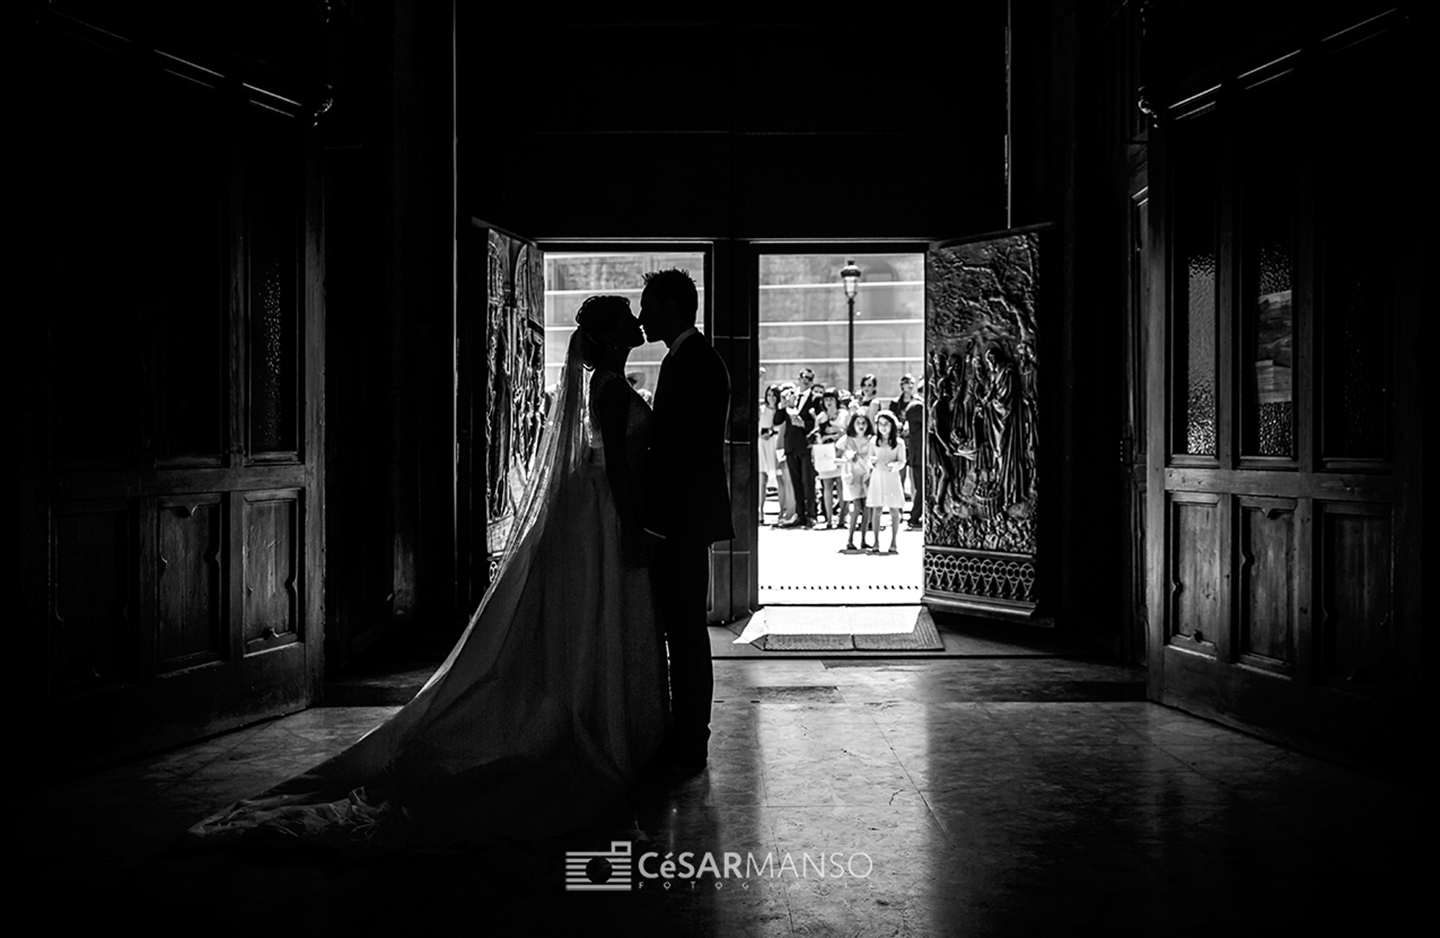 César Manso Fotógrafo: Fotógrafos de boda en Burgos - Boda%20AlejandrayJairo-18.JPG